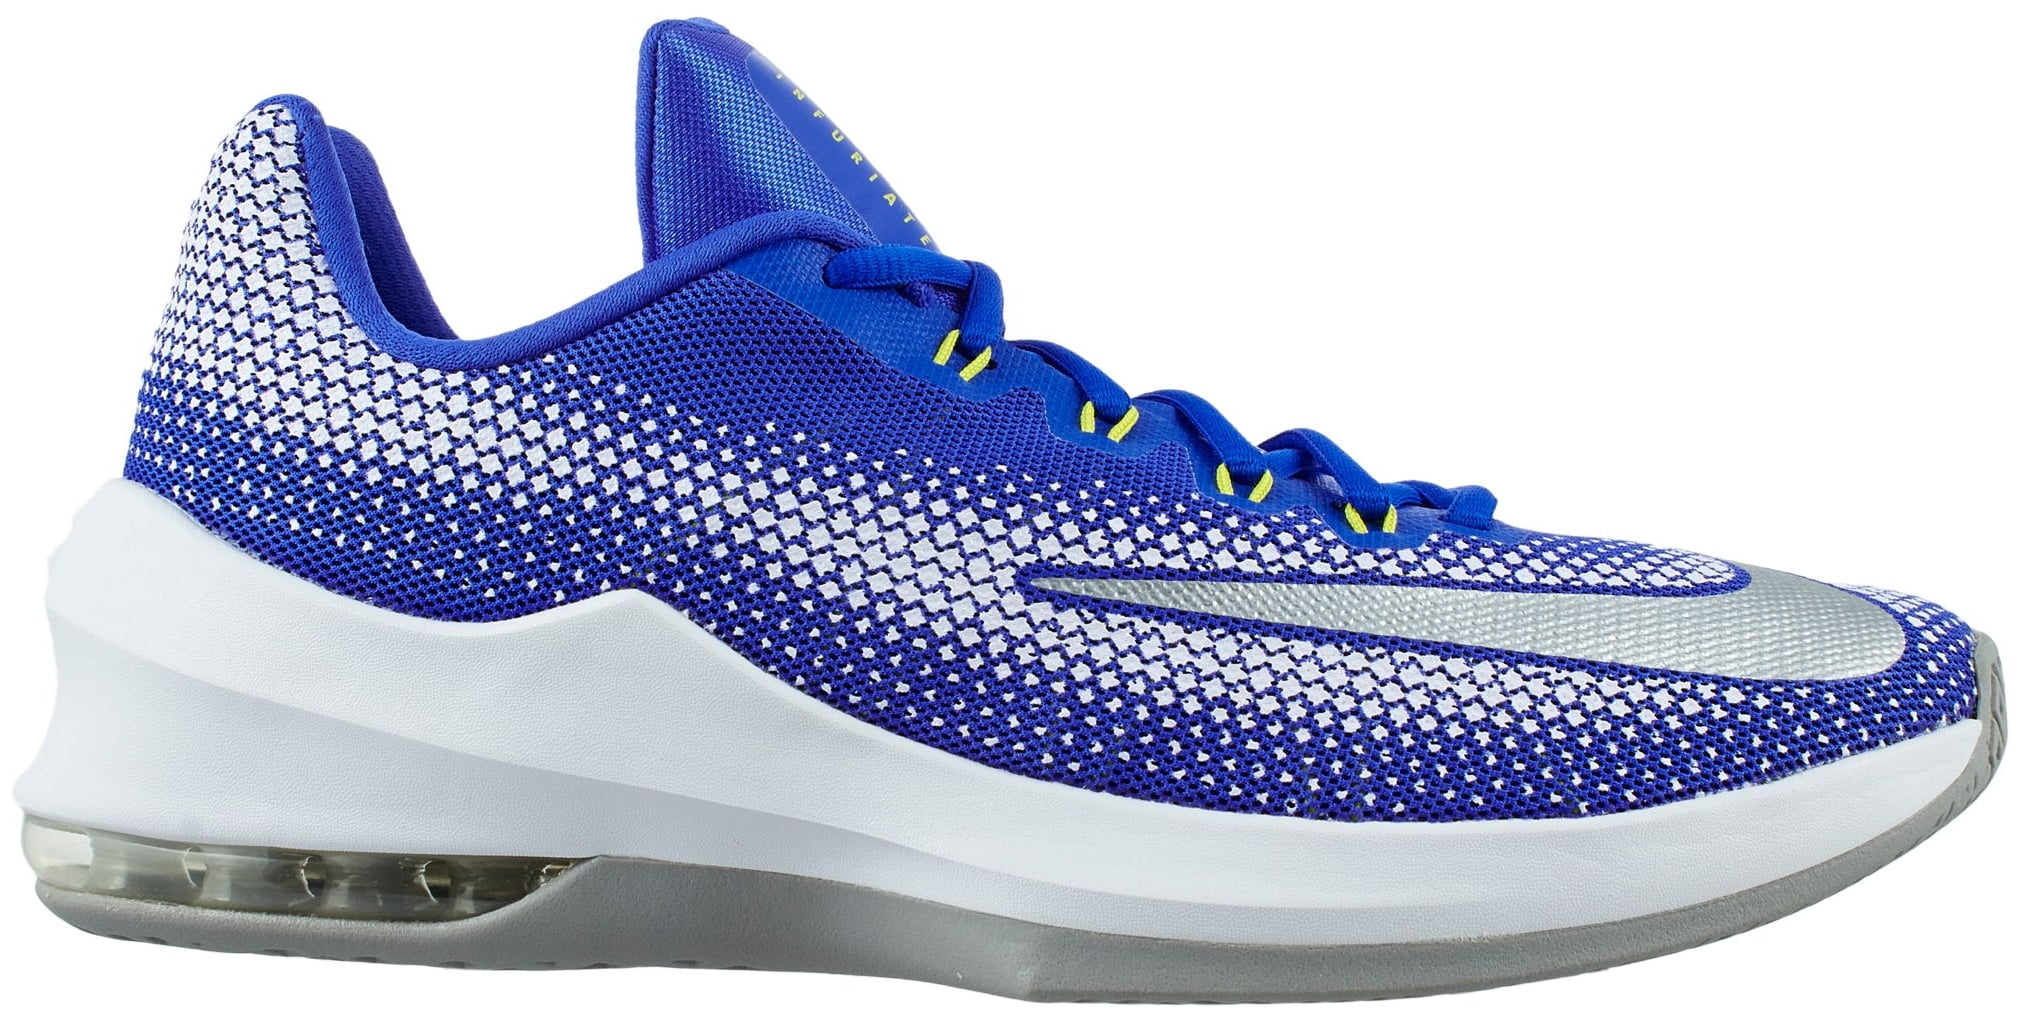 Nike Men's Infuriate Low Basketball Shoes - Blue/White - 10.0 - Walmart.com